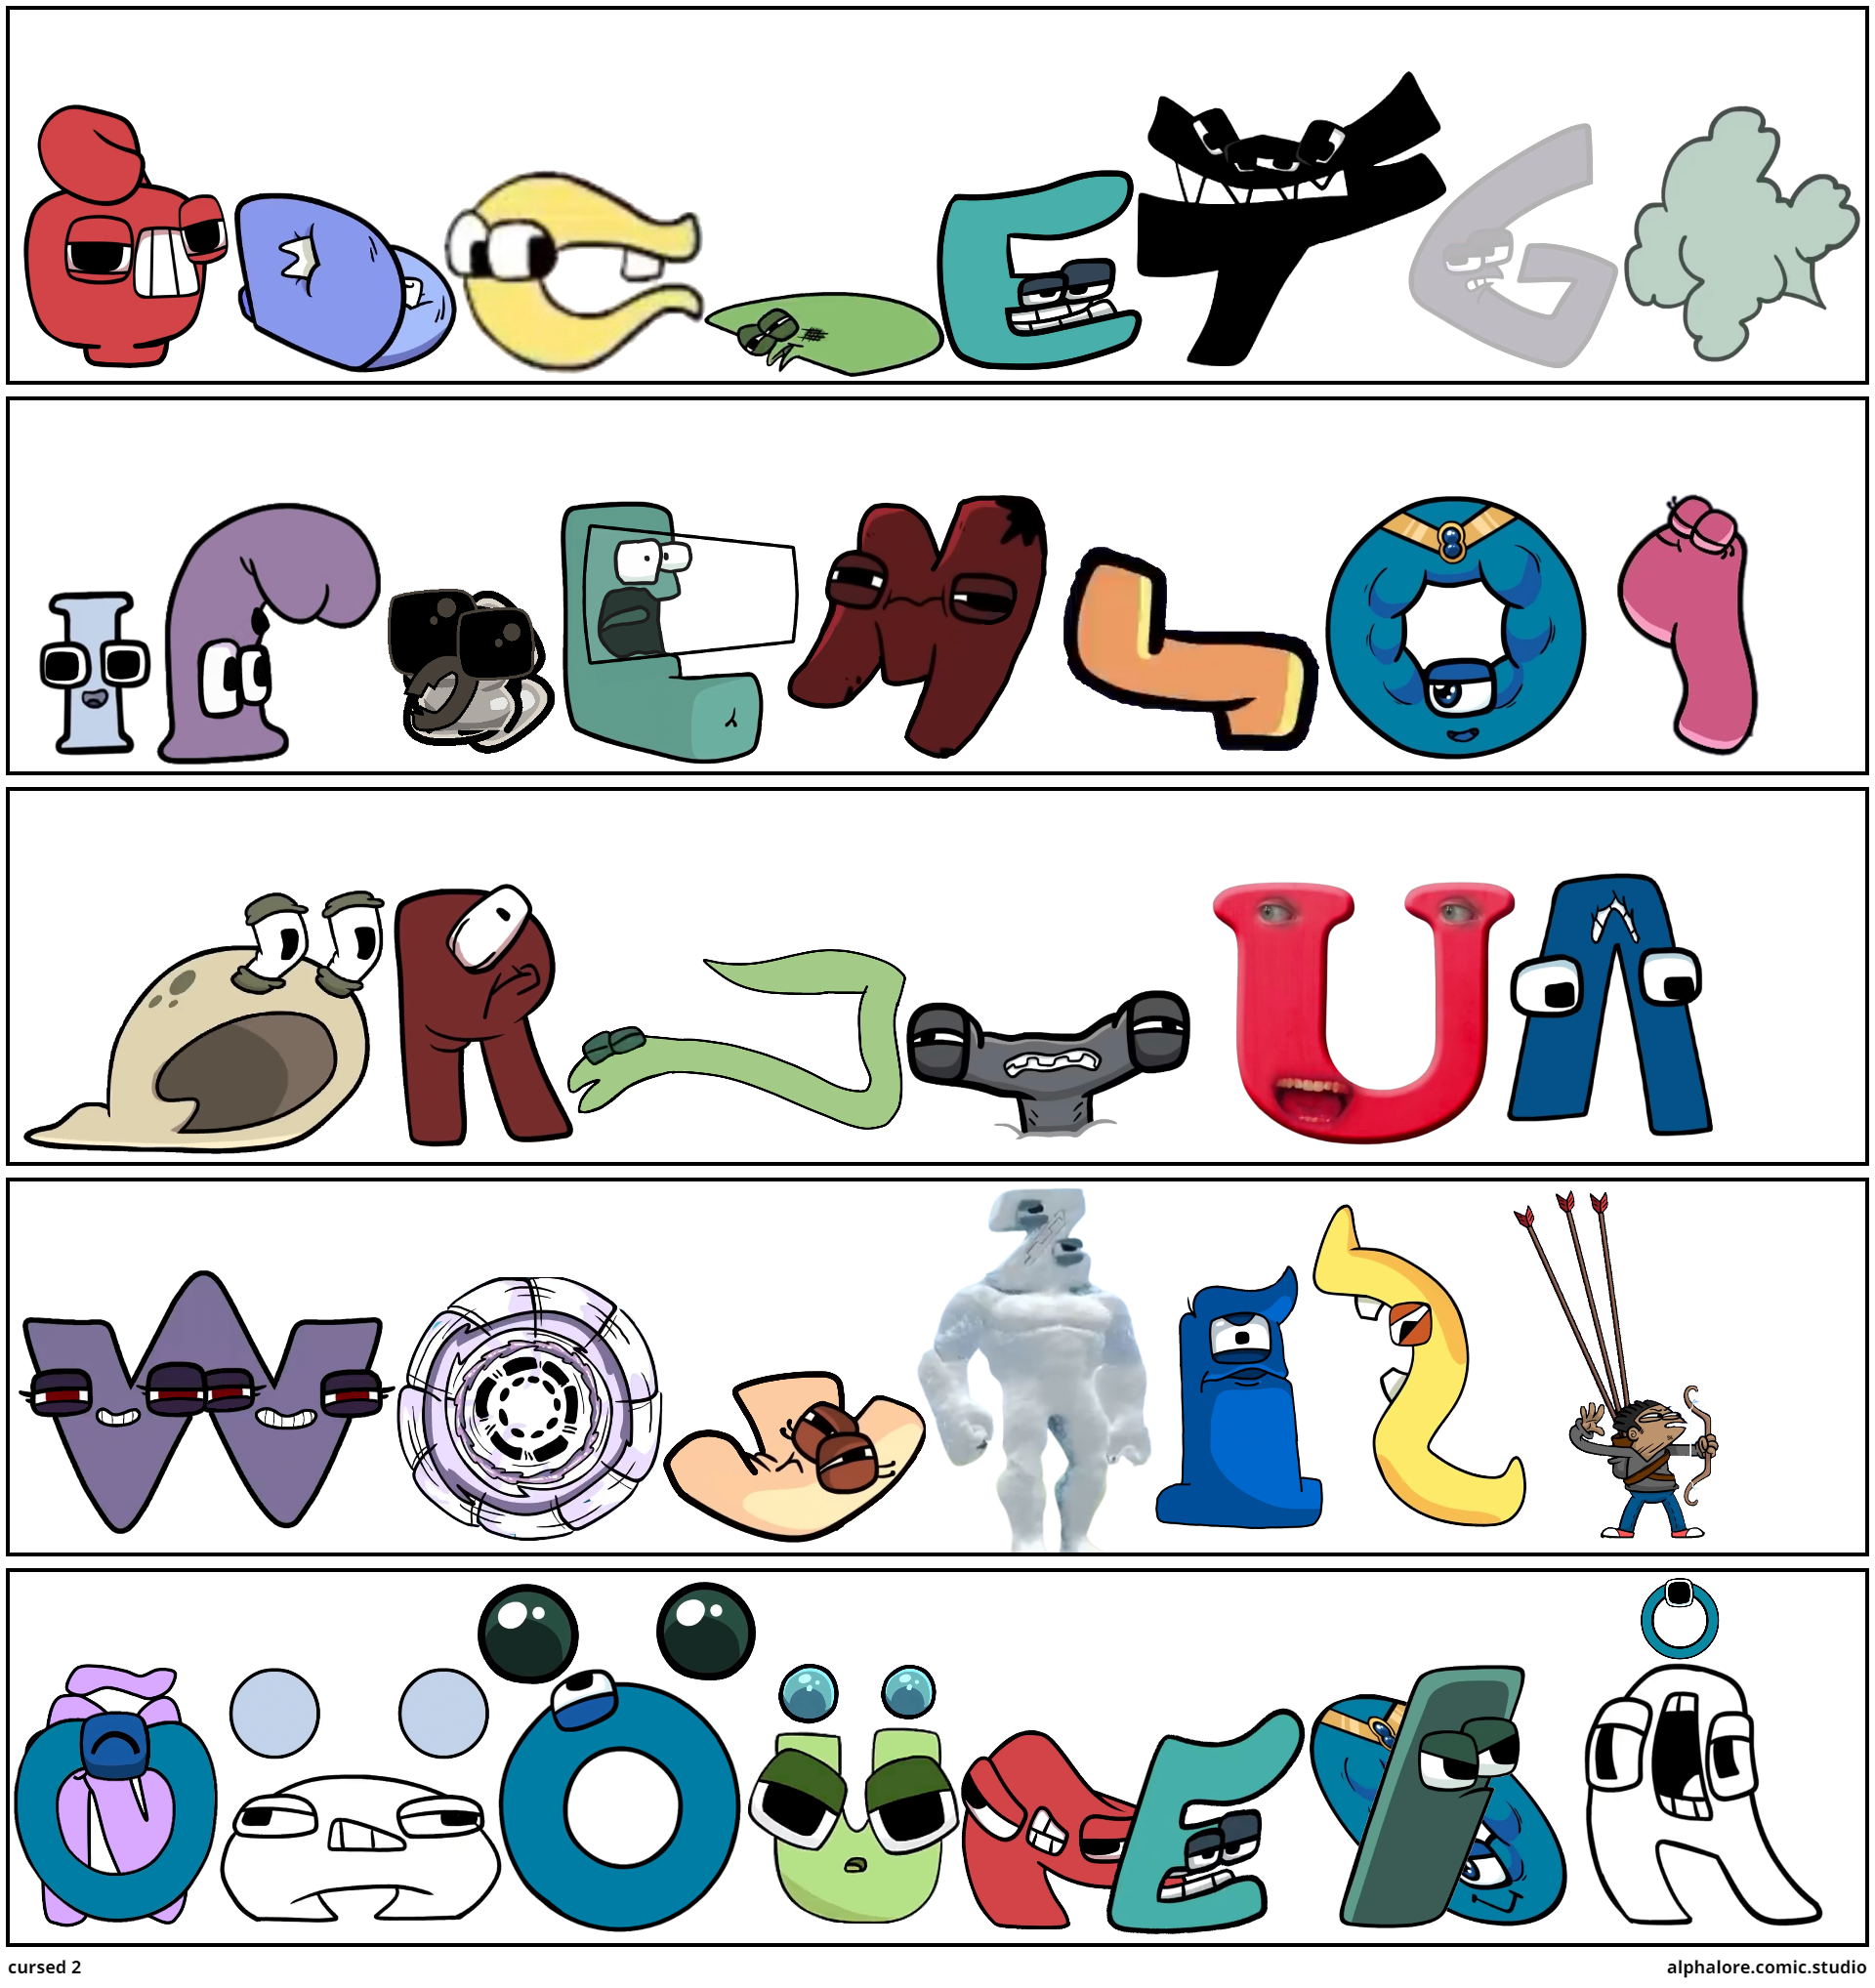 Lowercase alphabet lore - Comic Studio